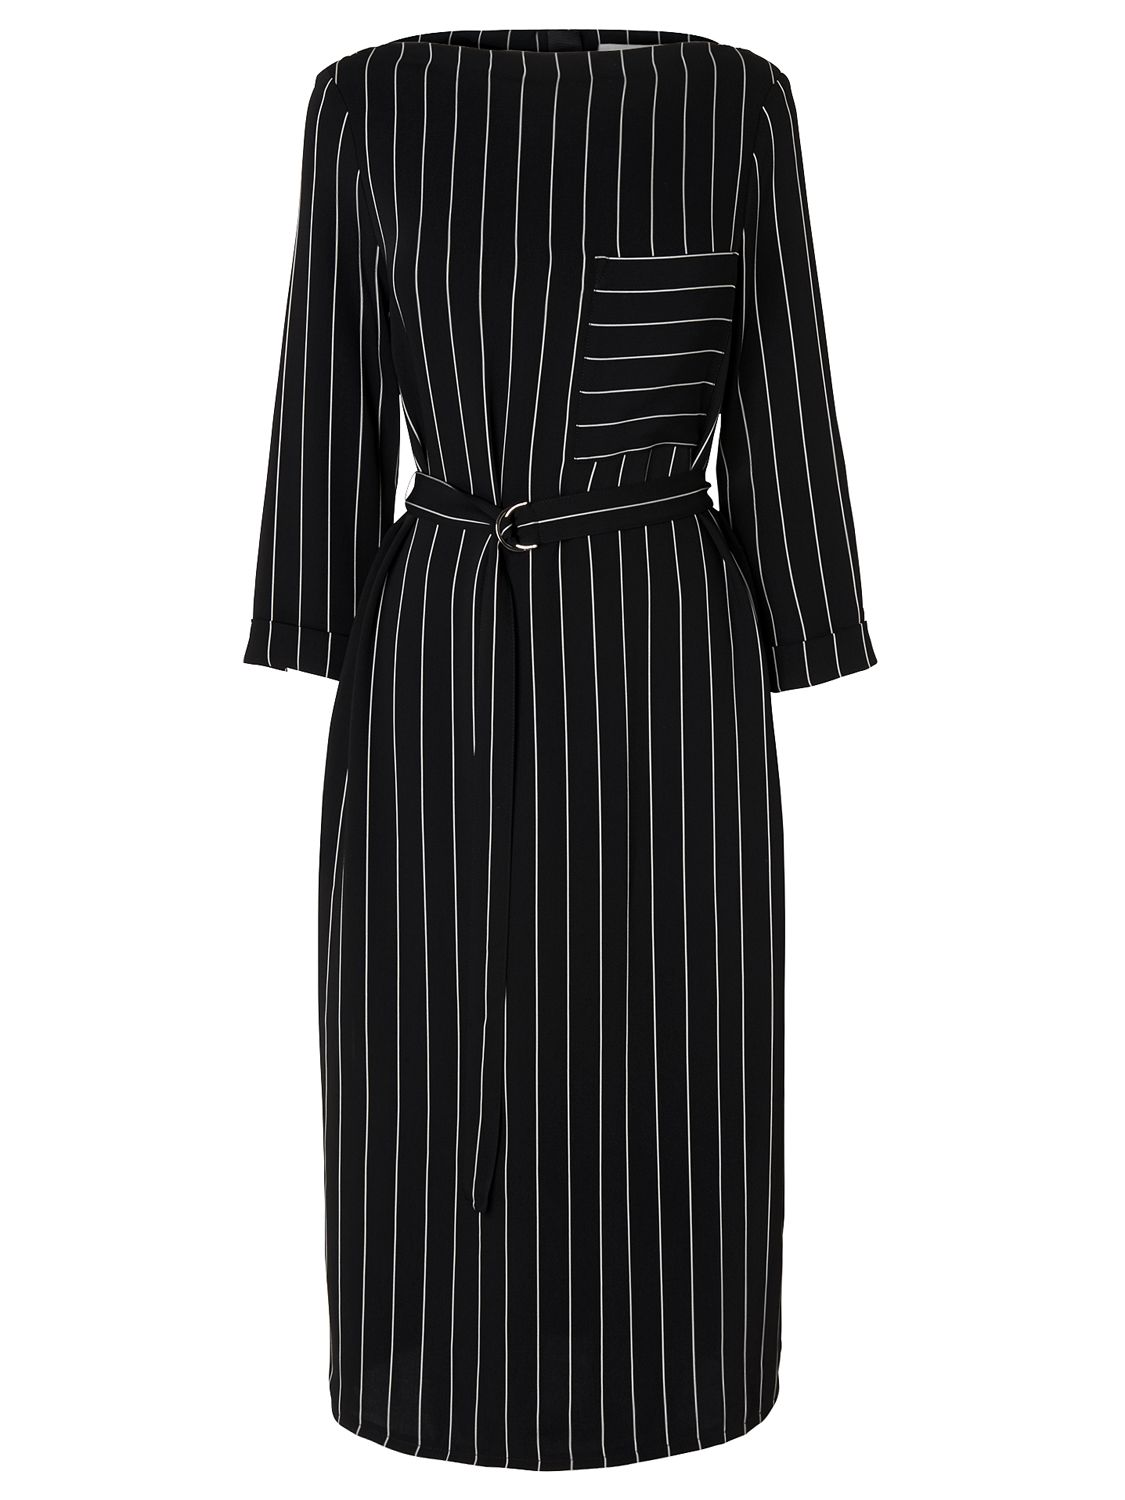 L.K. Bennett Caralyn Wide Stripe Dress, Black at John Lewis & Partners